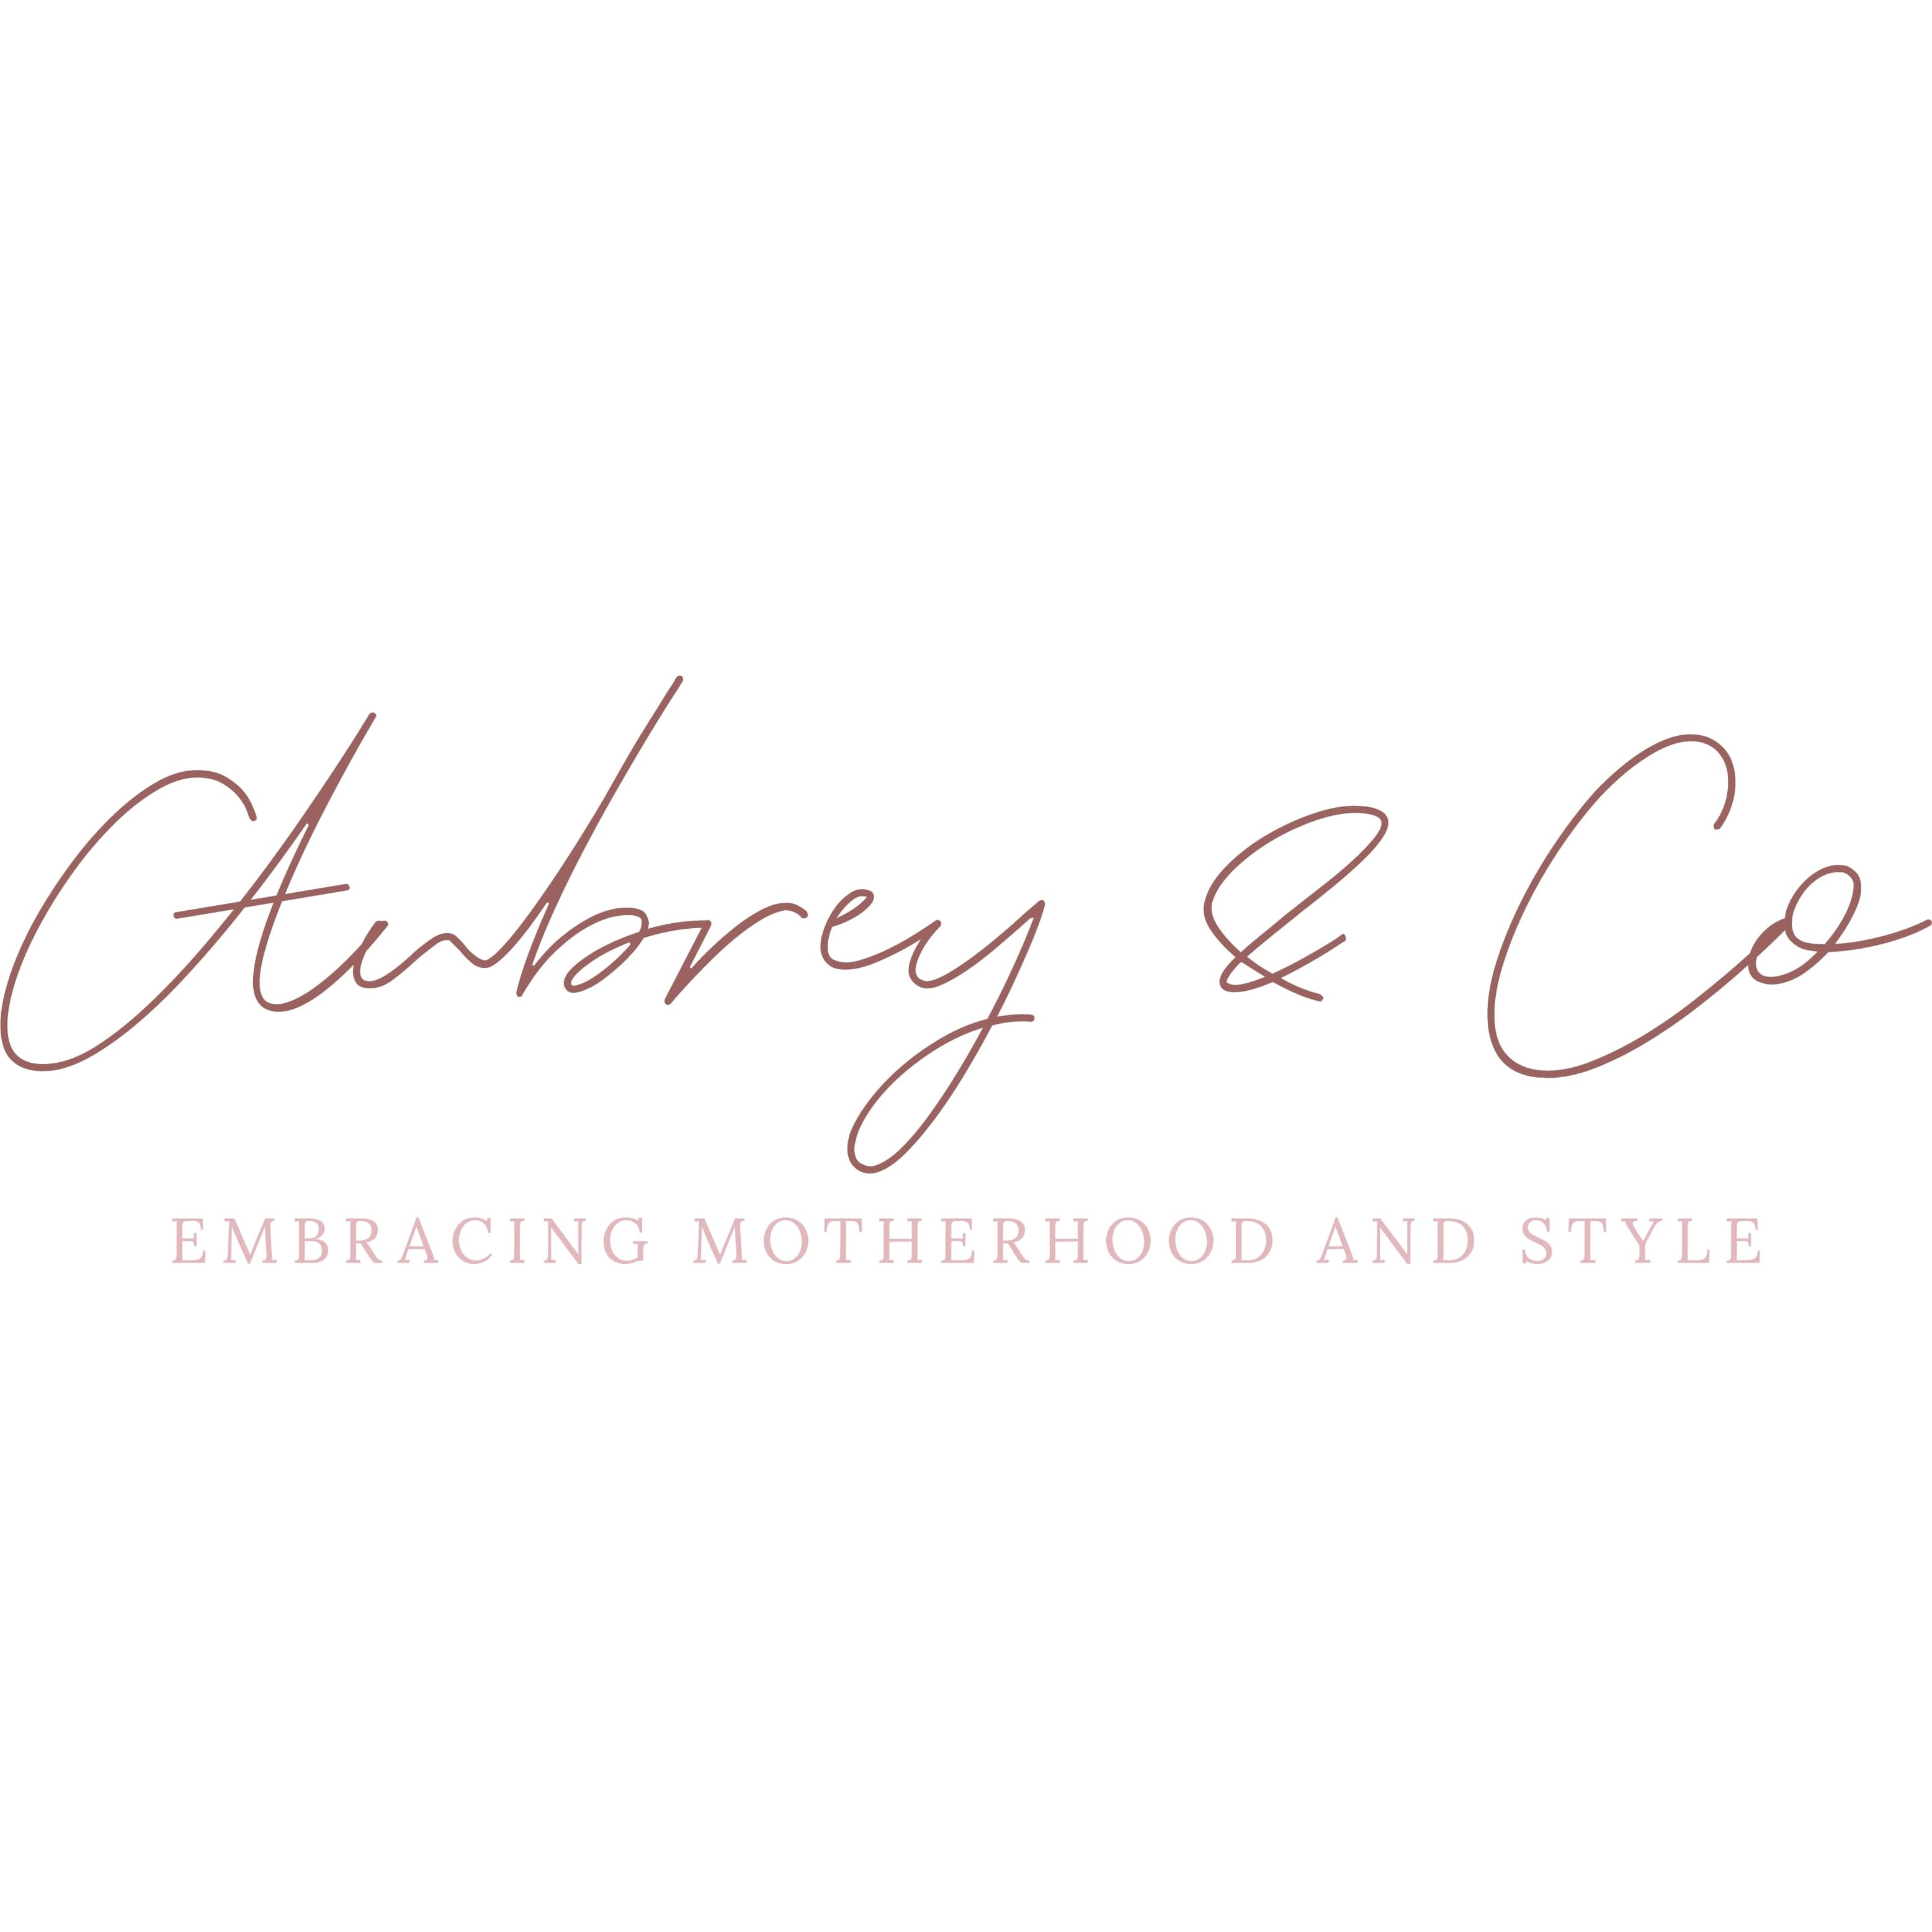 Company Logo For Aubrey &amp; Co'